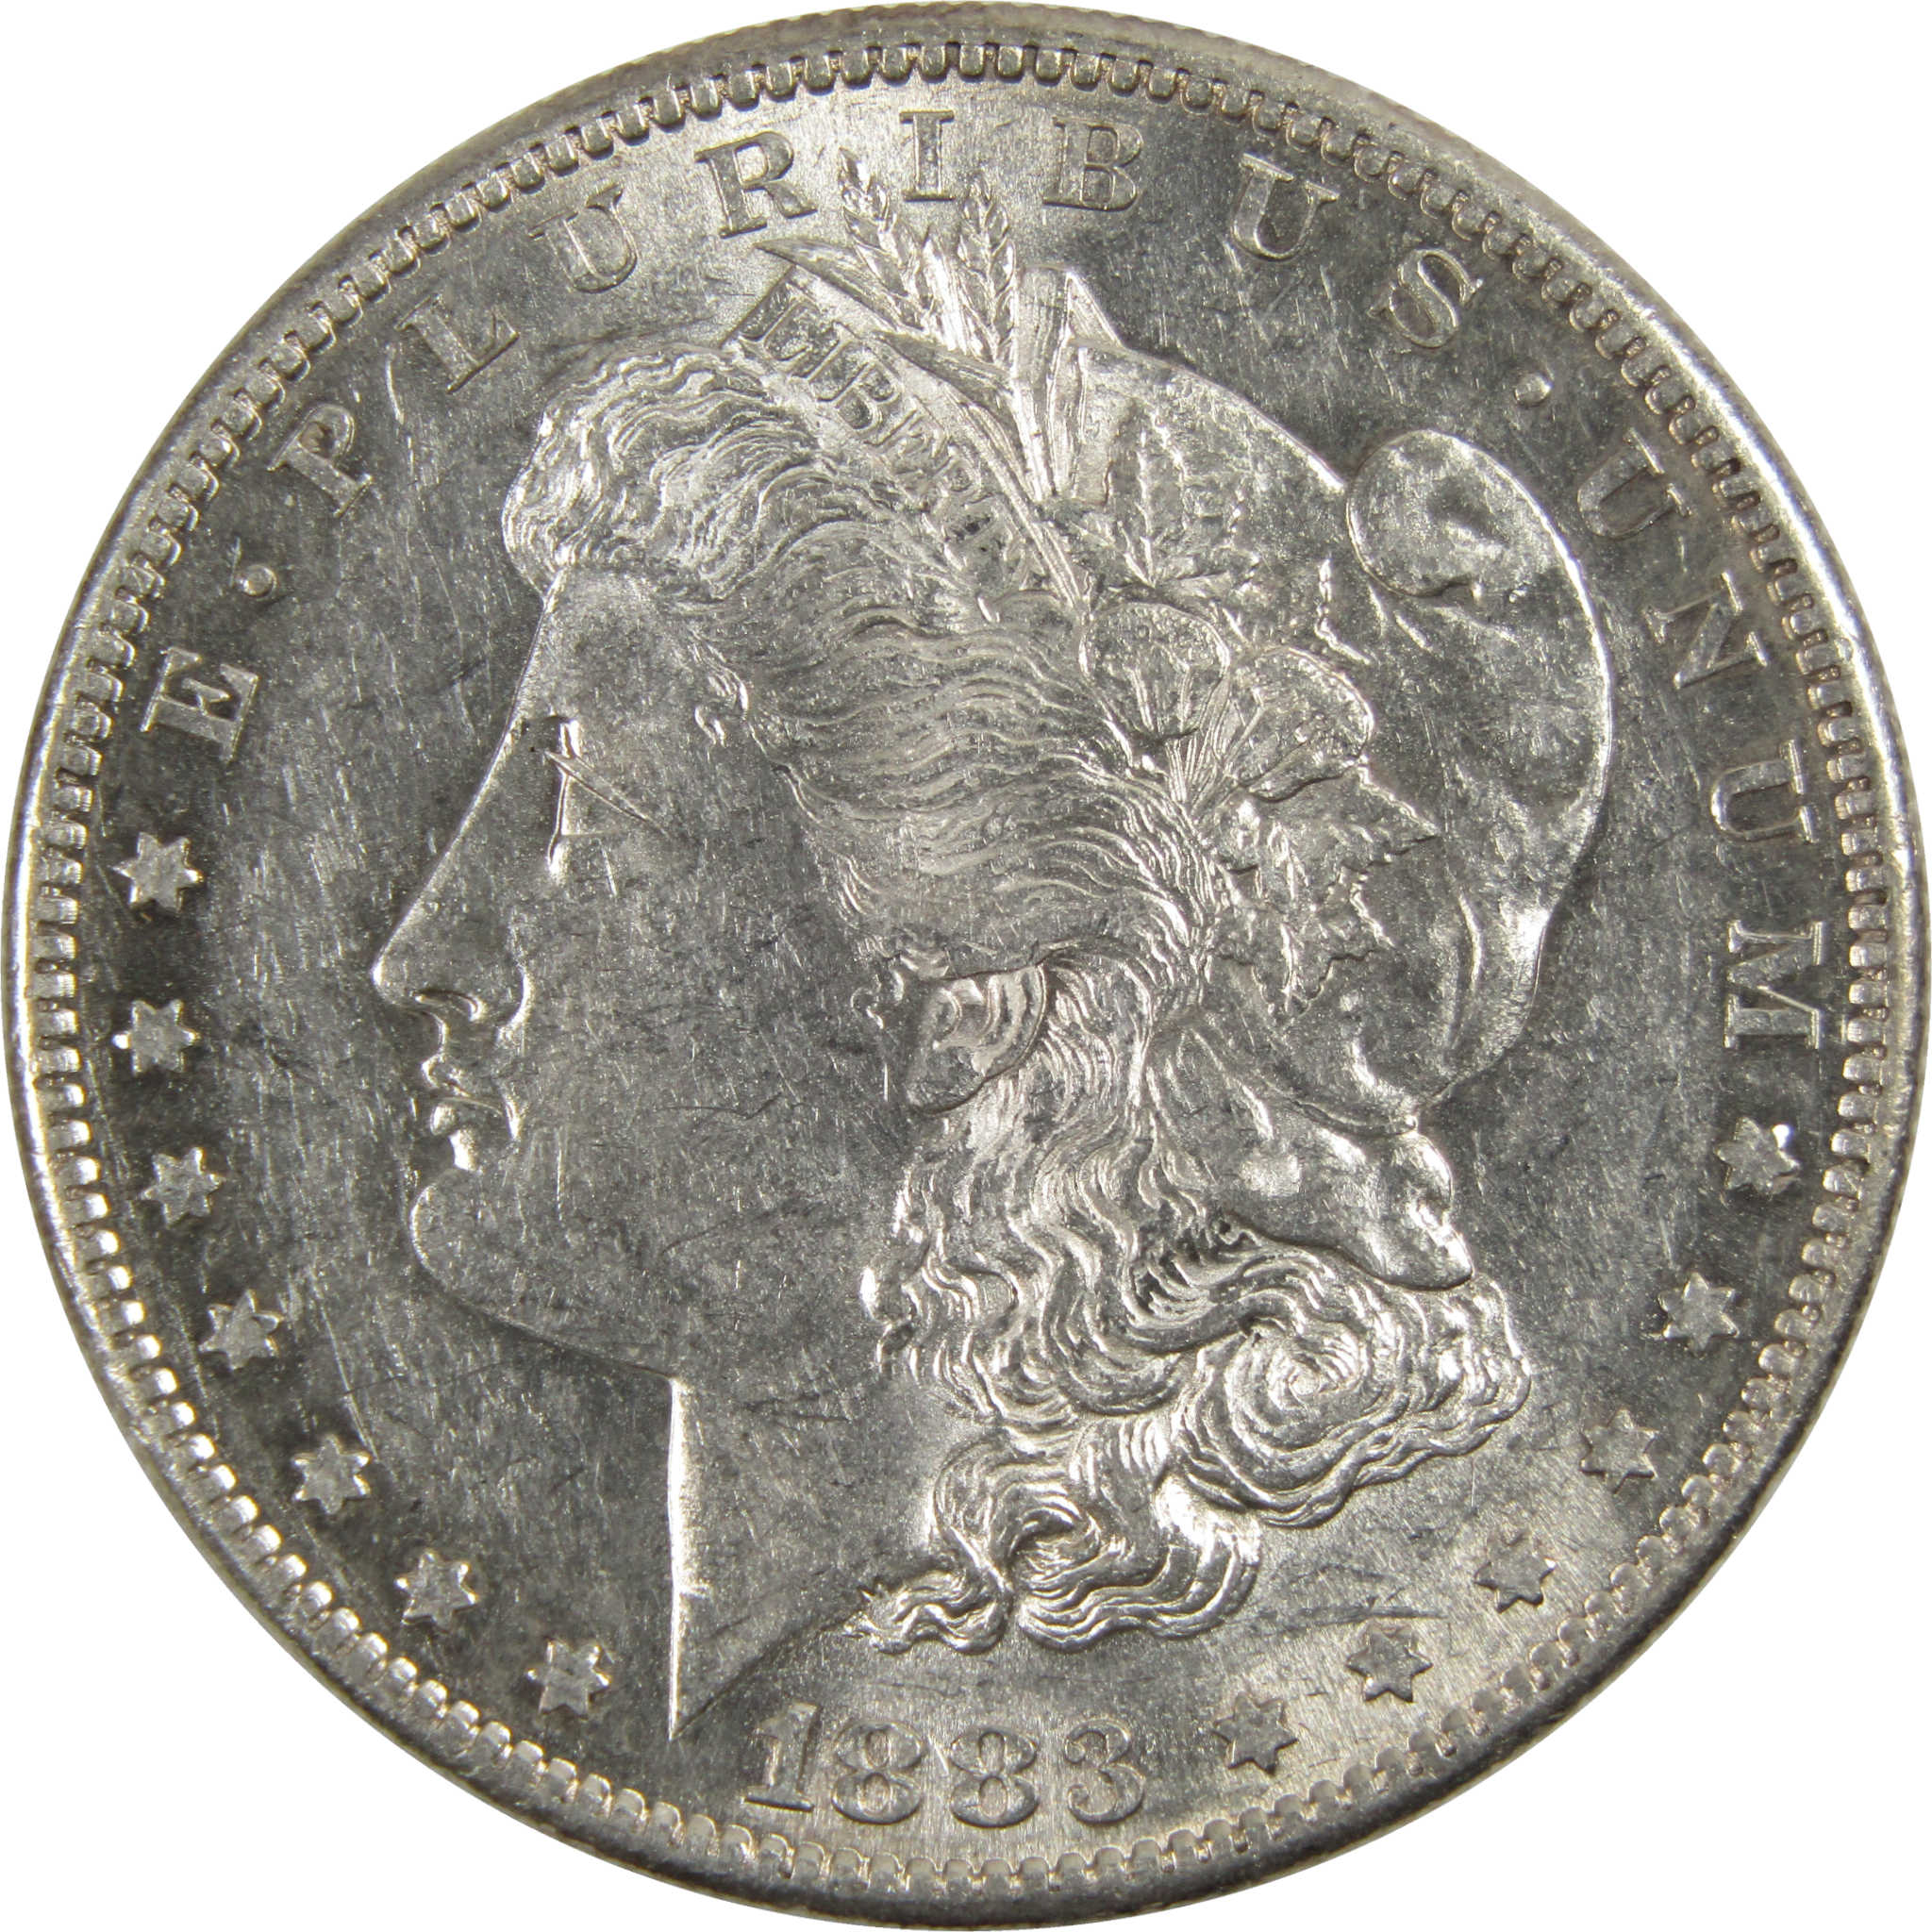 1883 S Morgan Dollar Borderline Uncirculated 90% Silver $1 SKU:I8087 - Morgan coin - Morgan silver dollar - Morgan silver dollar for sale - Profile Coins &amp; Collectibles